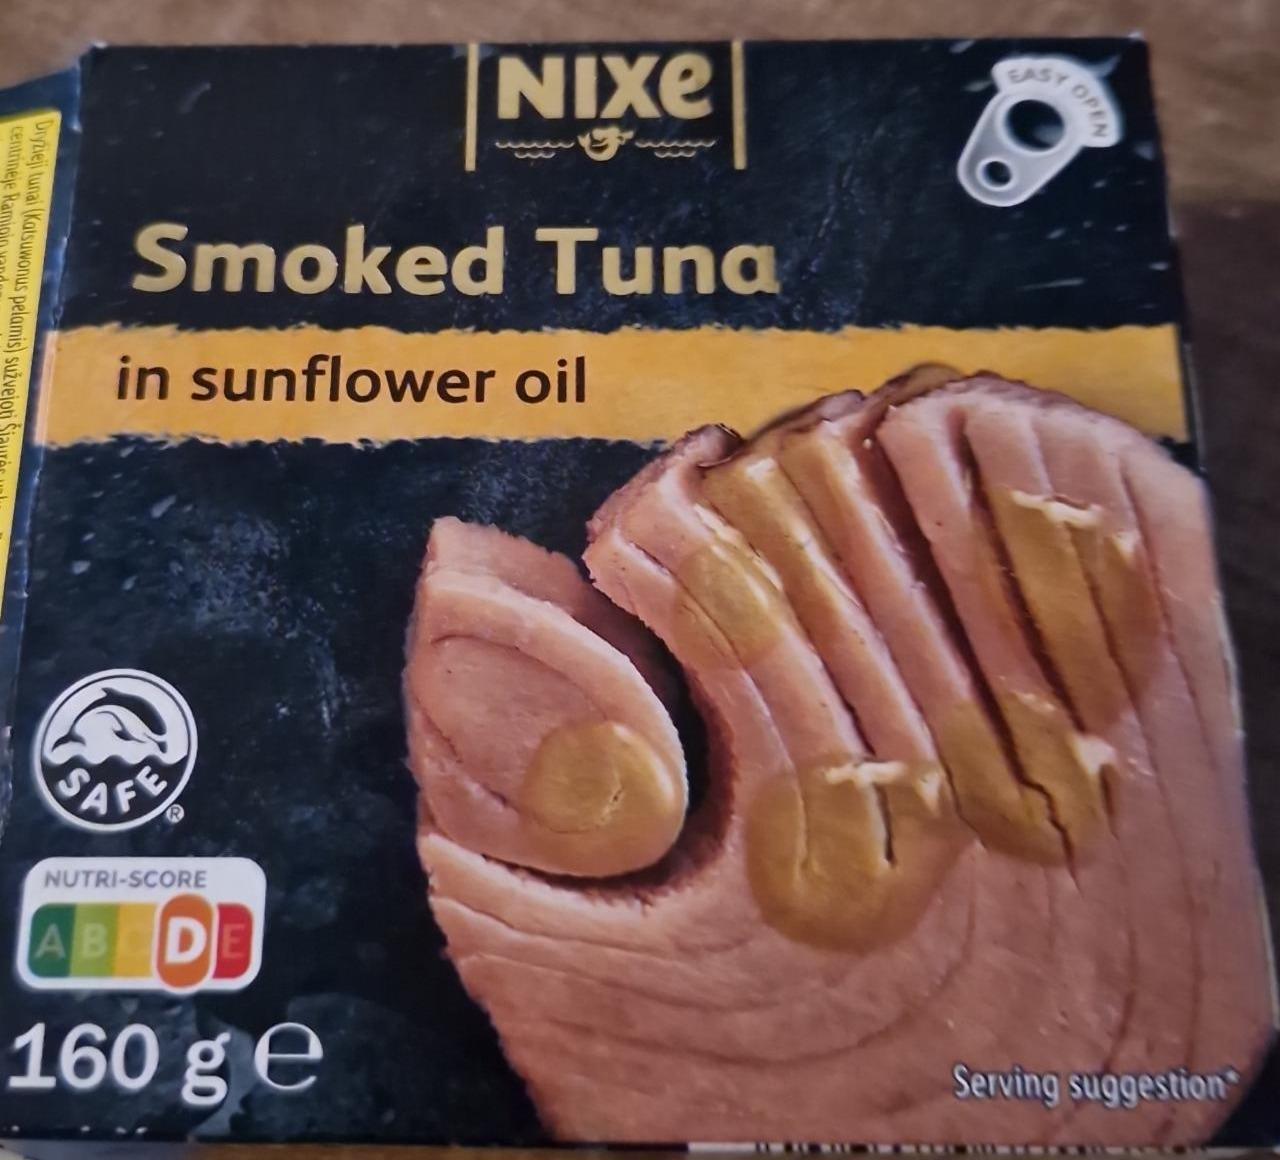 Fotografie - Smoked Tuna in sunflower oil Nixe